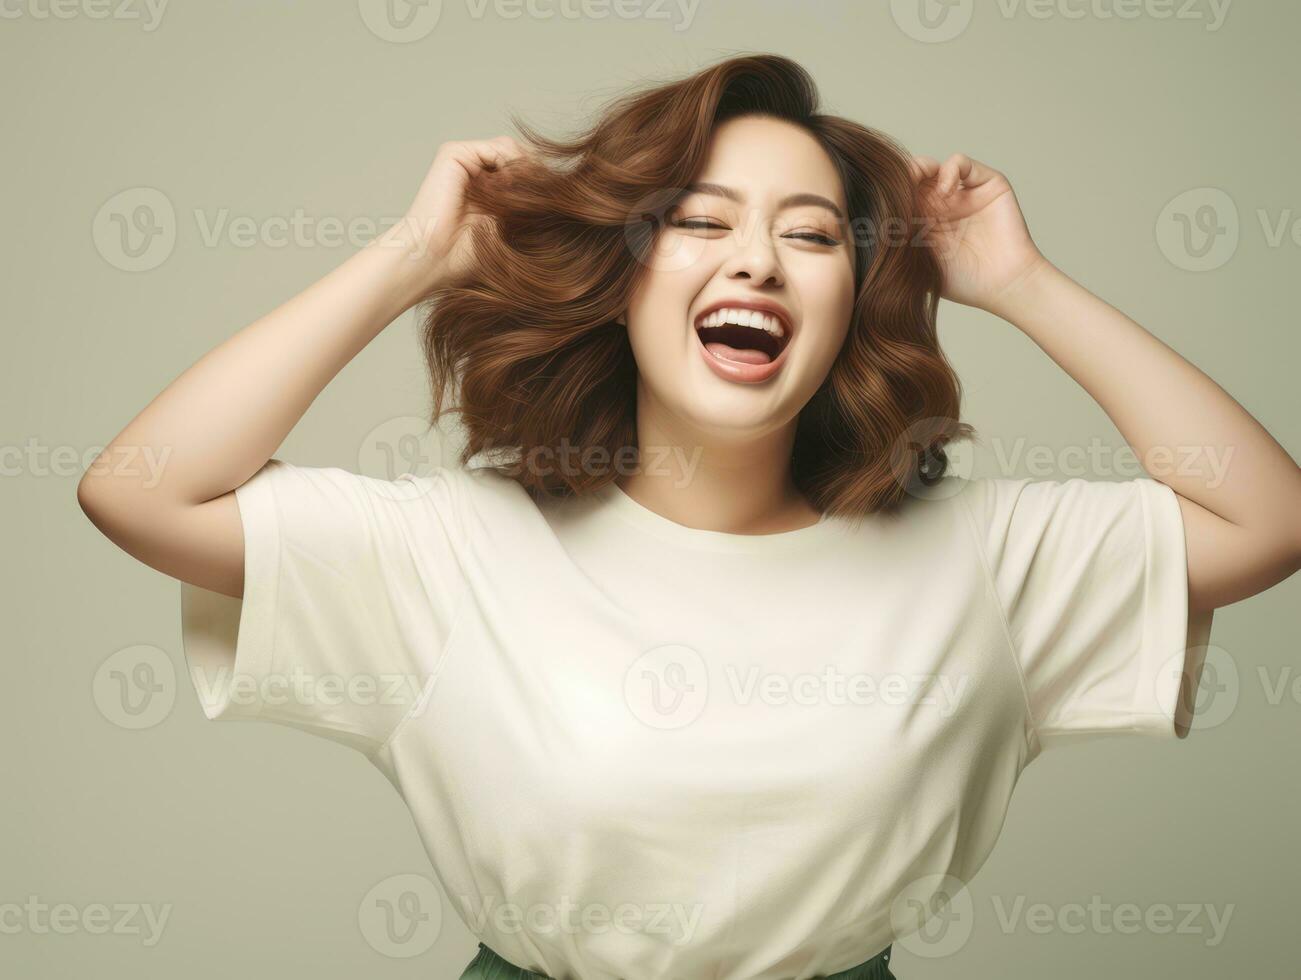 Plus Größe asiatisch Frau im emotional dynamisch Pose ai generativ foto